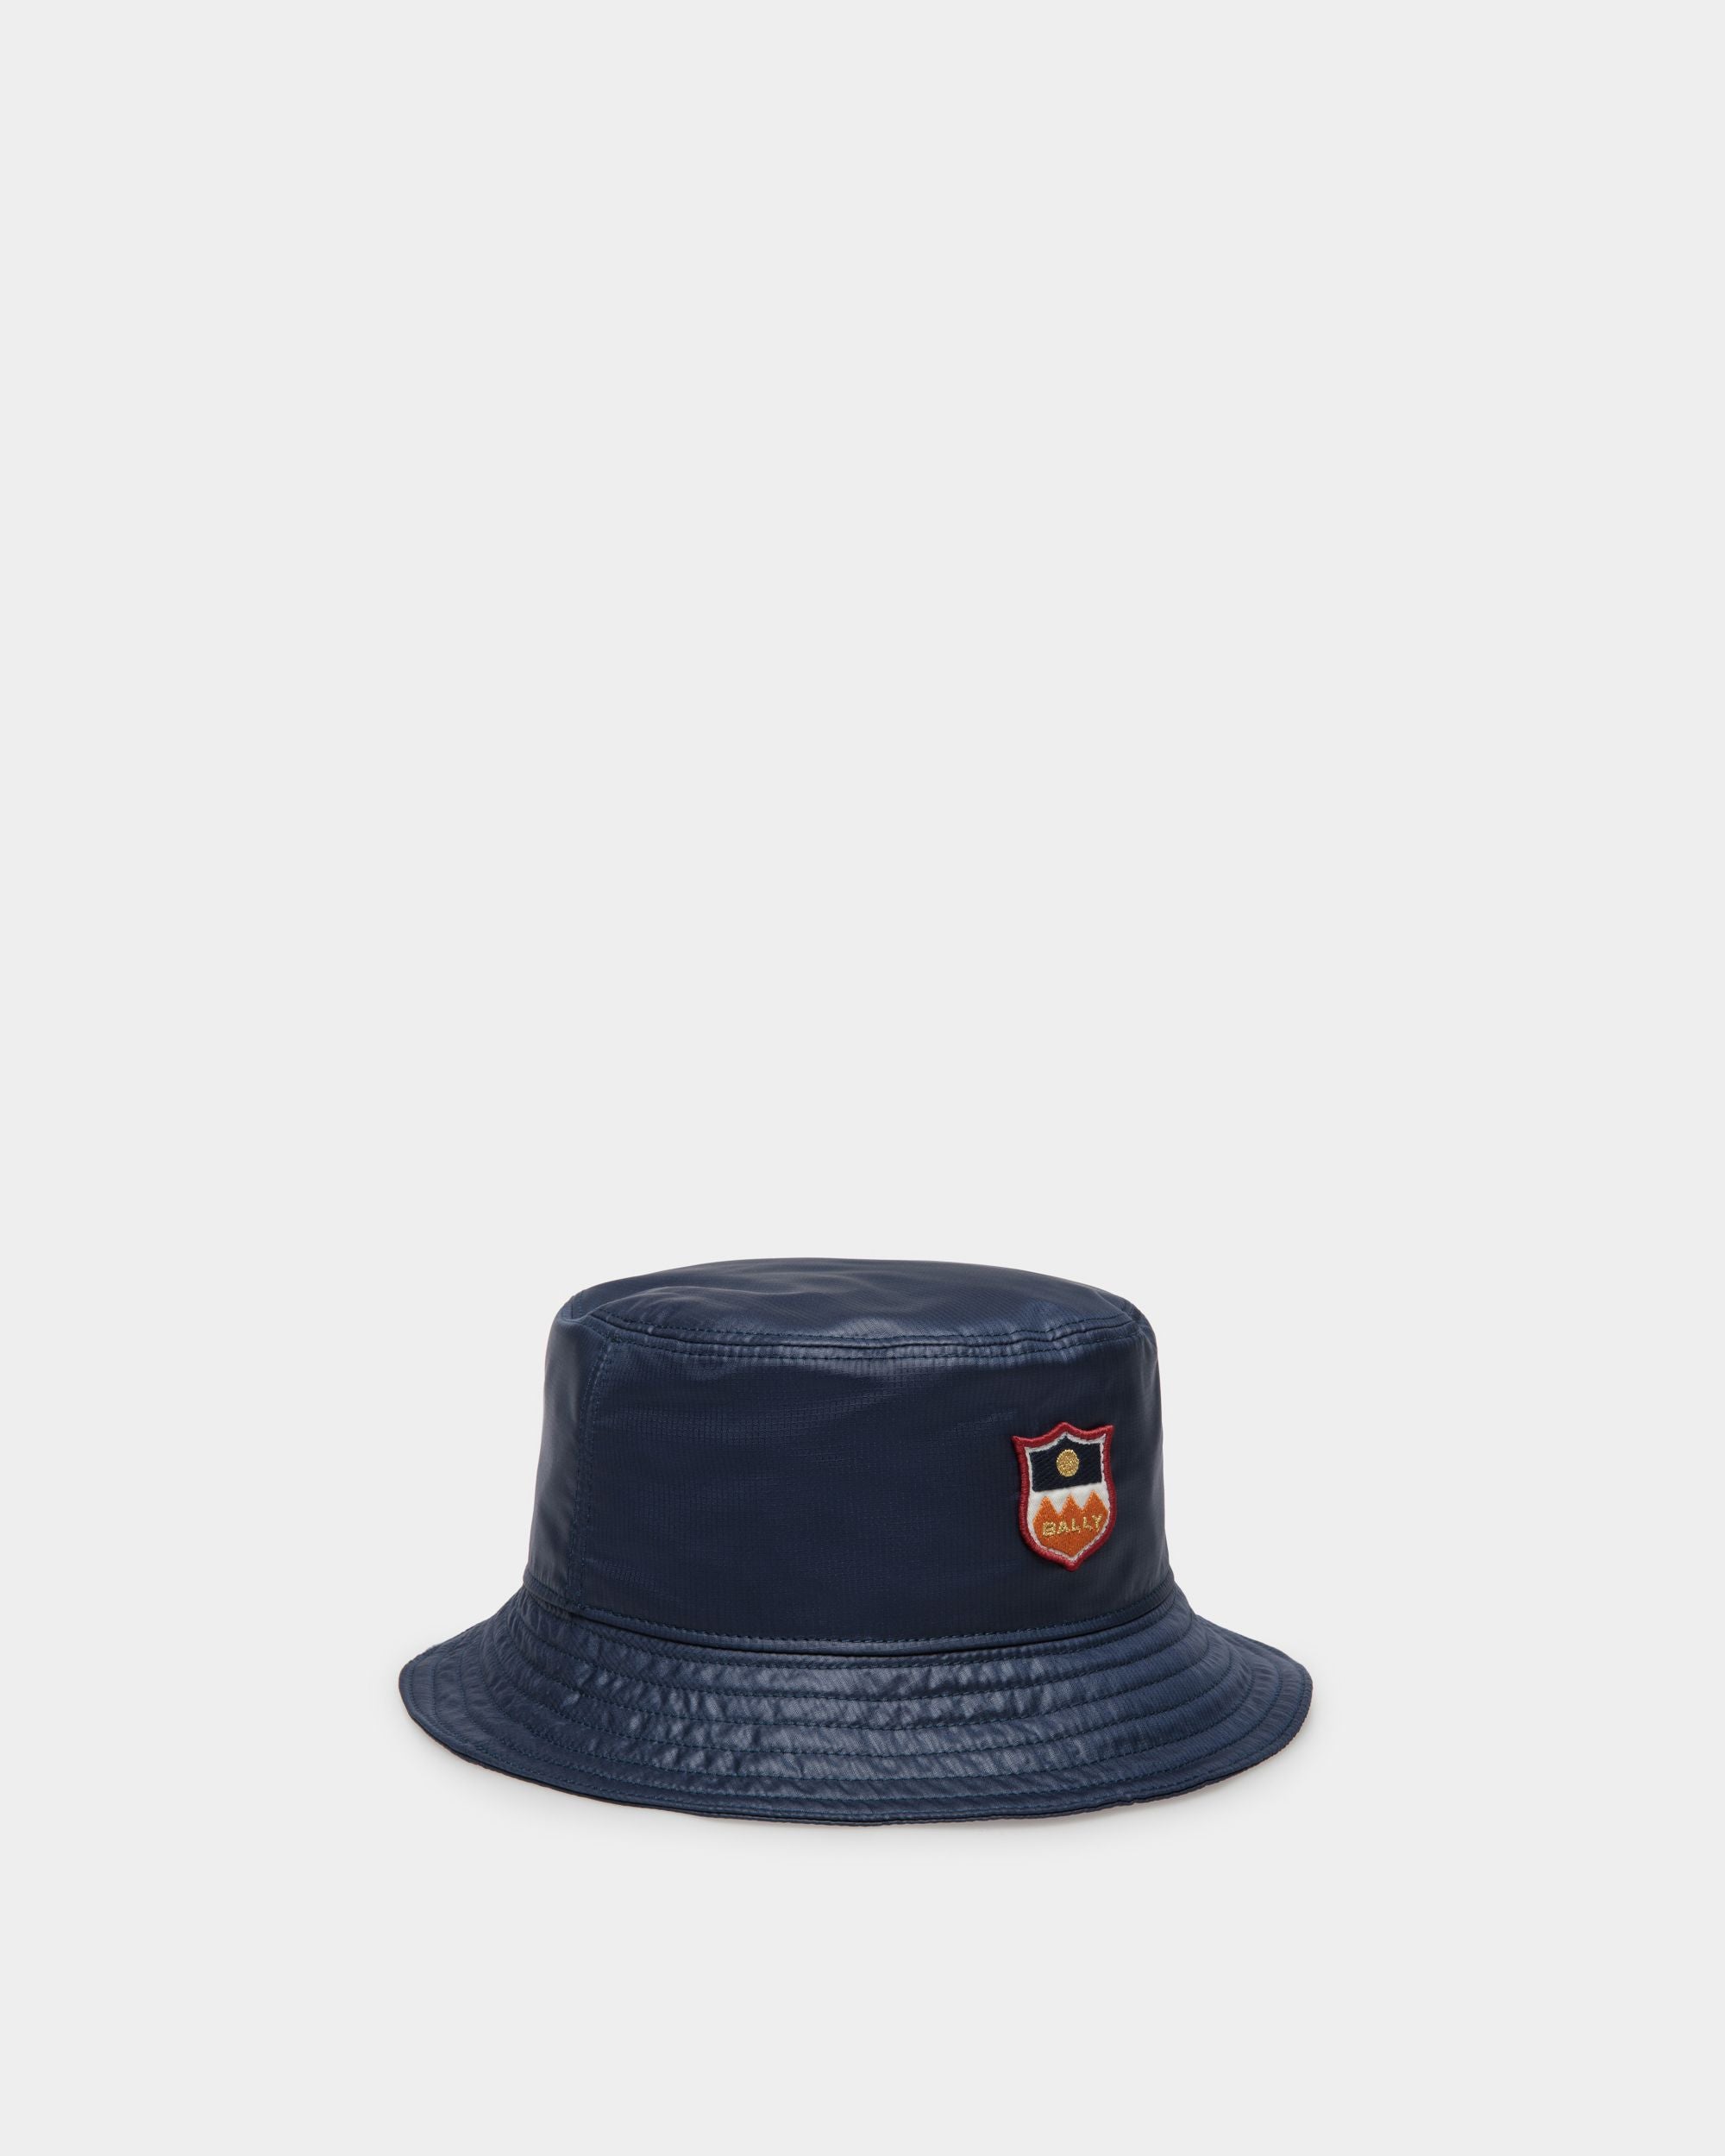 Men's Bucket Hat in Navy Blue Technical Fabric | Bally | Still Life Front